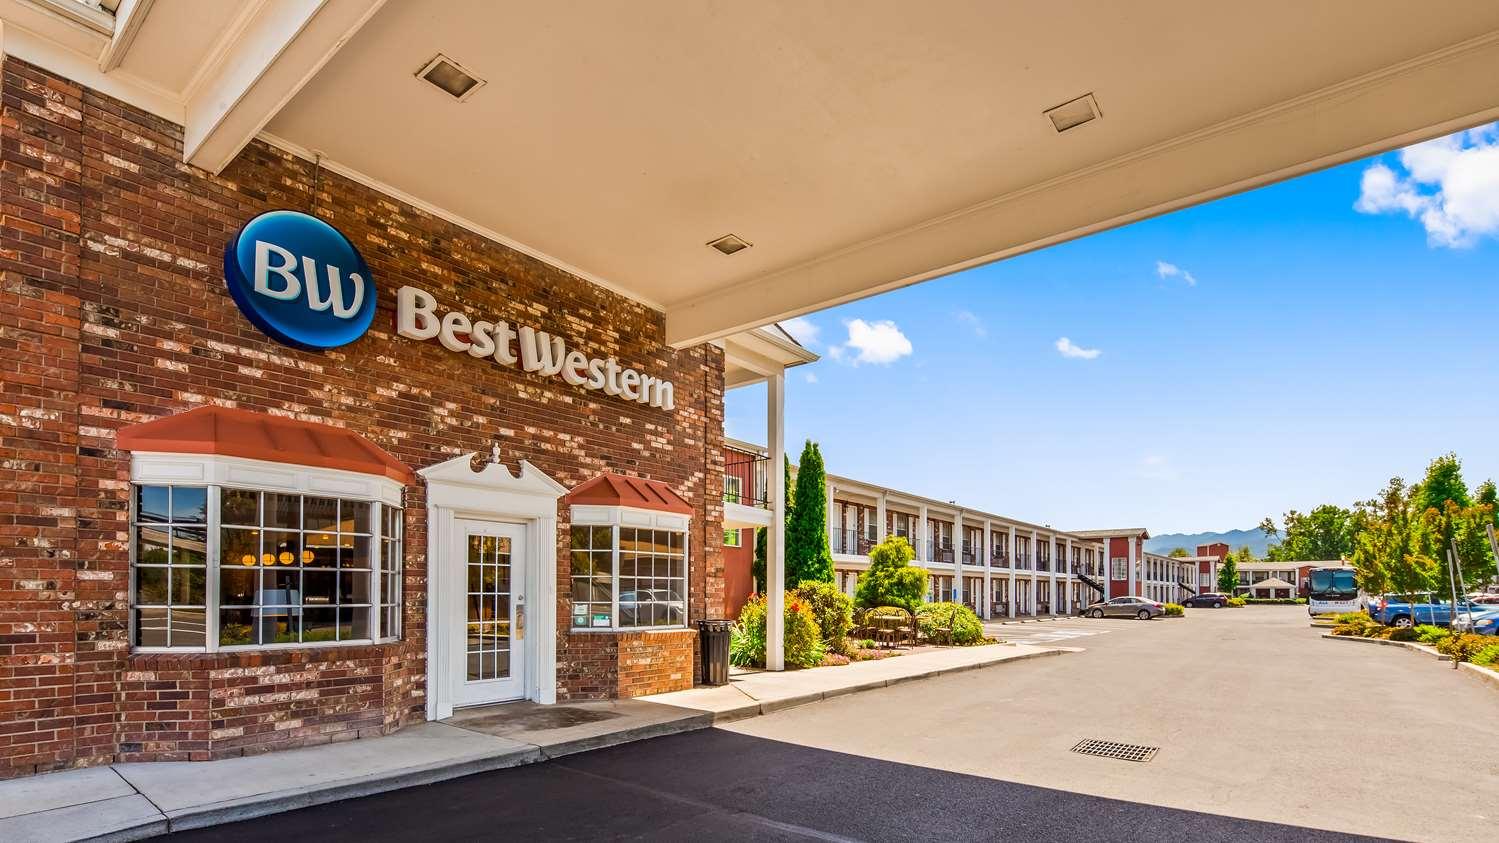 Best Western Horizon Inn in Medford, OR